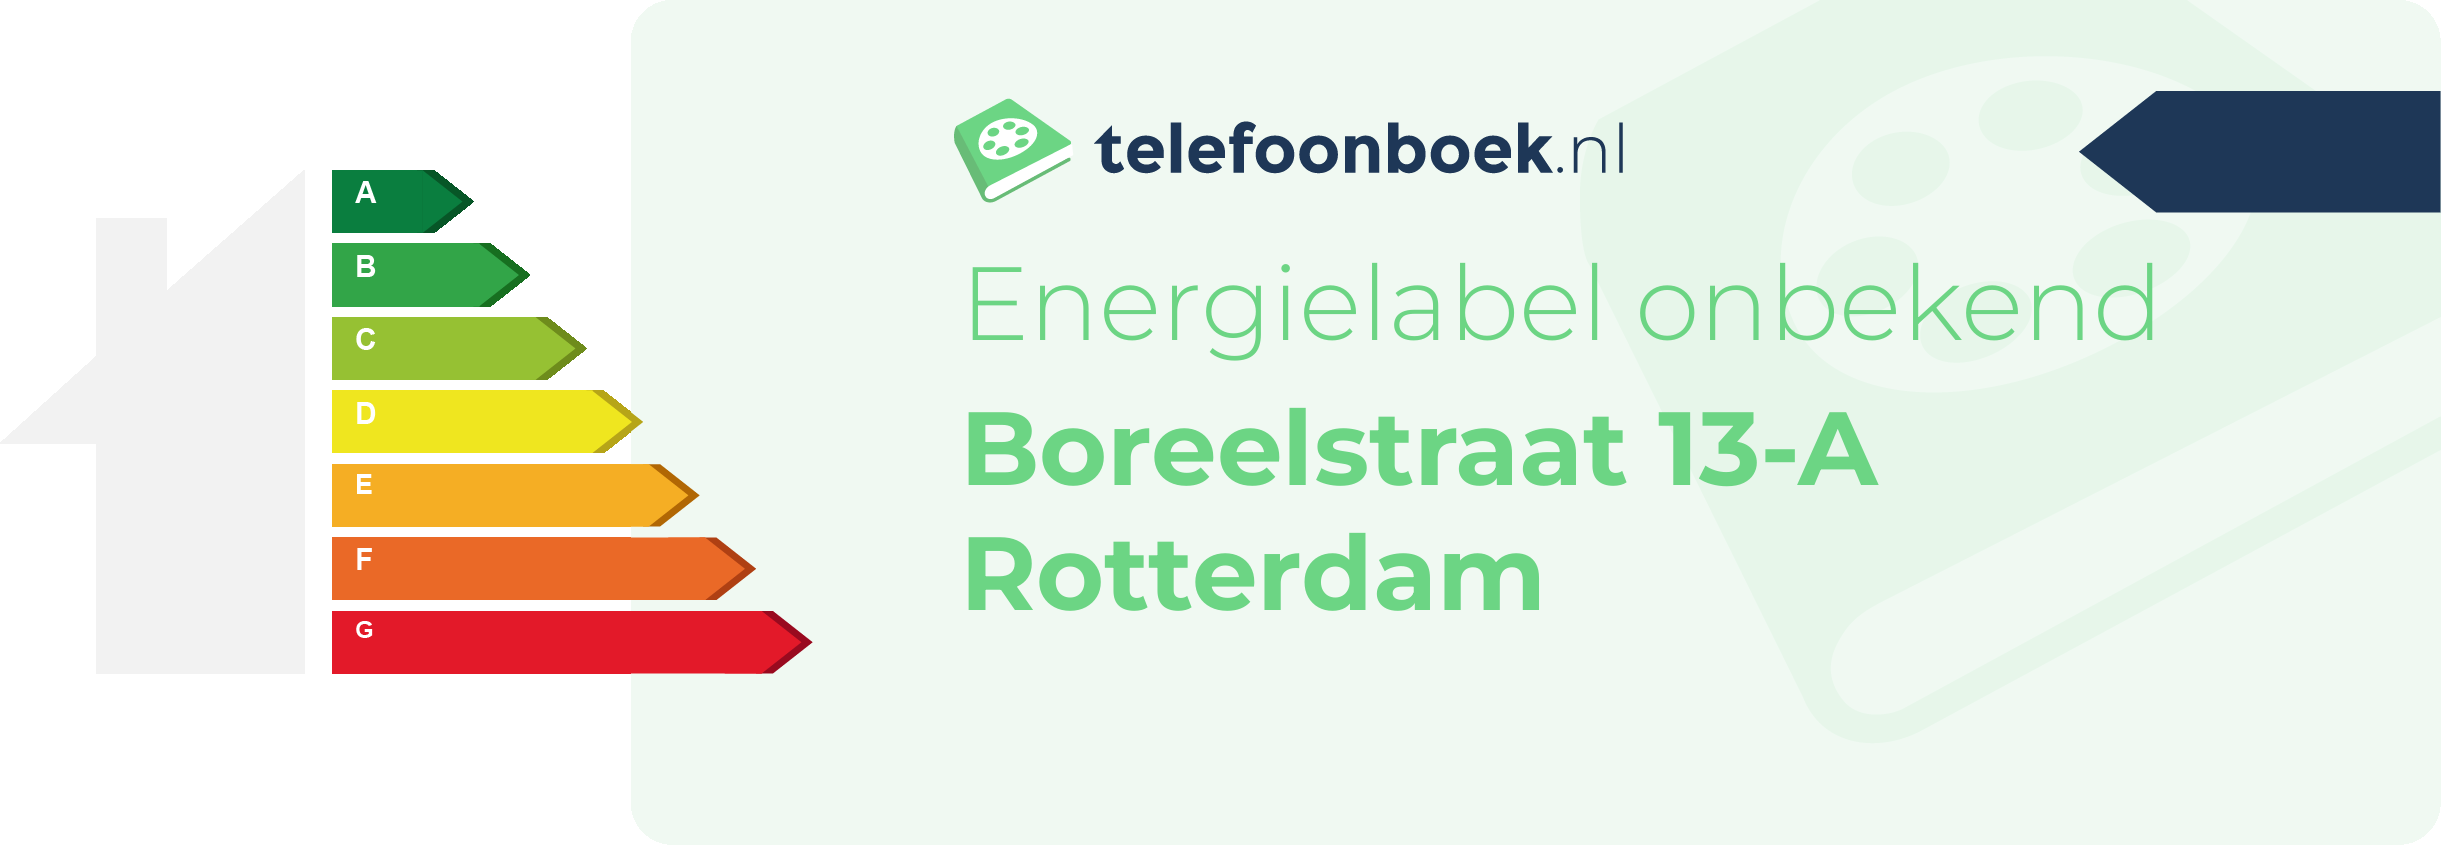 Energielabel Boreelstraat 13-A Rotterdam